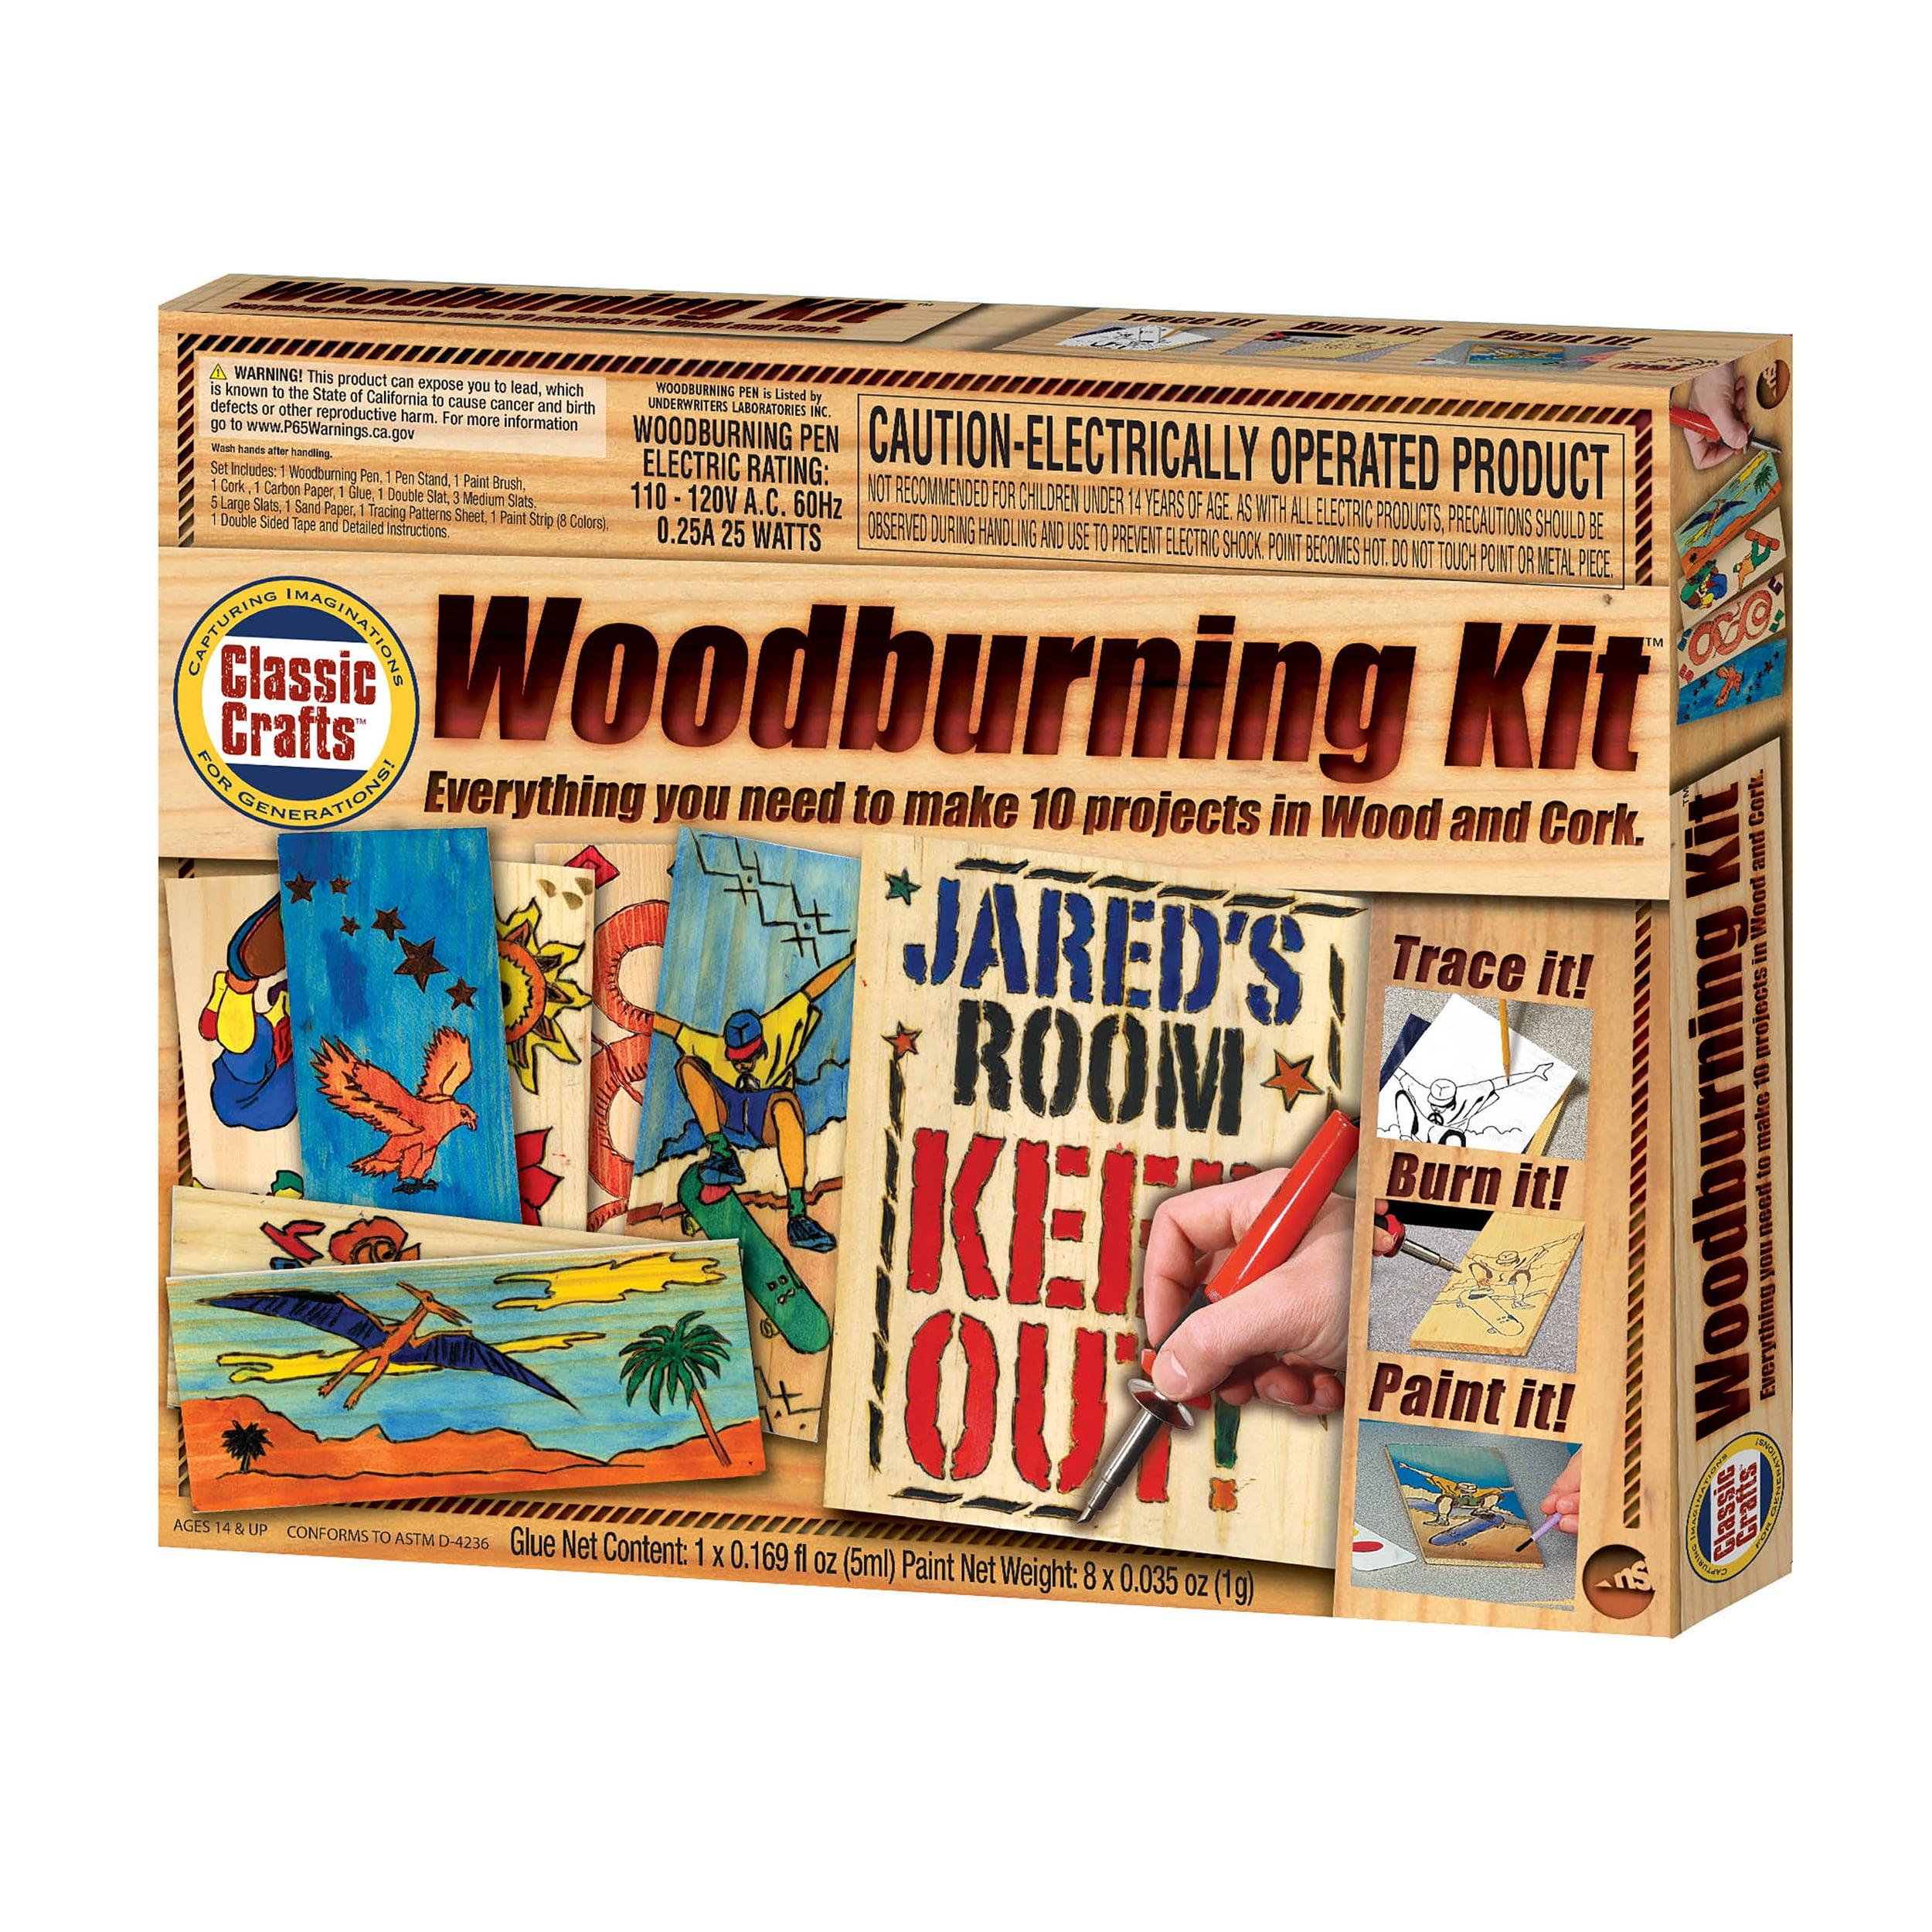 Wood Burning Kits for sale in Wabasso, Minnesota, Facebook Marketplace